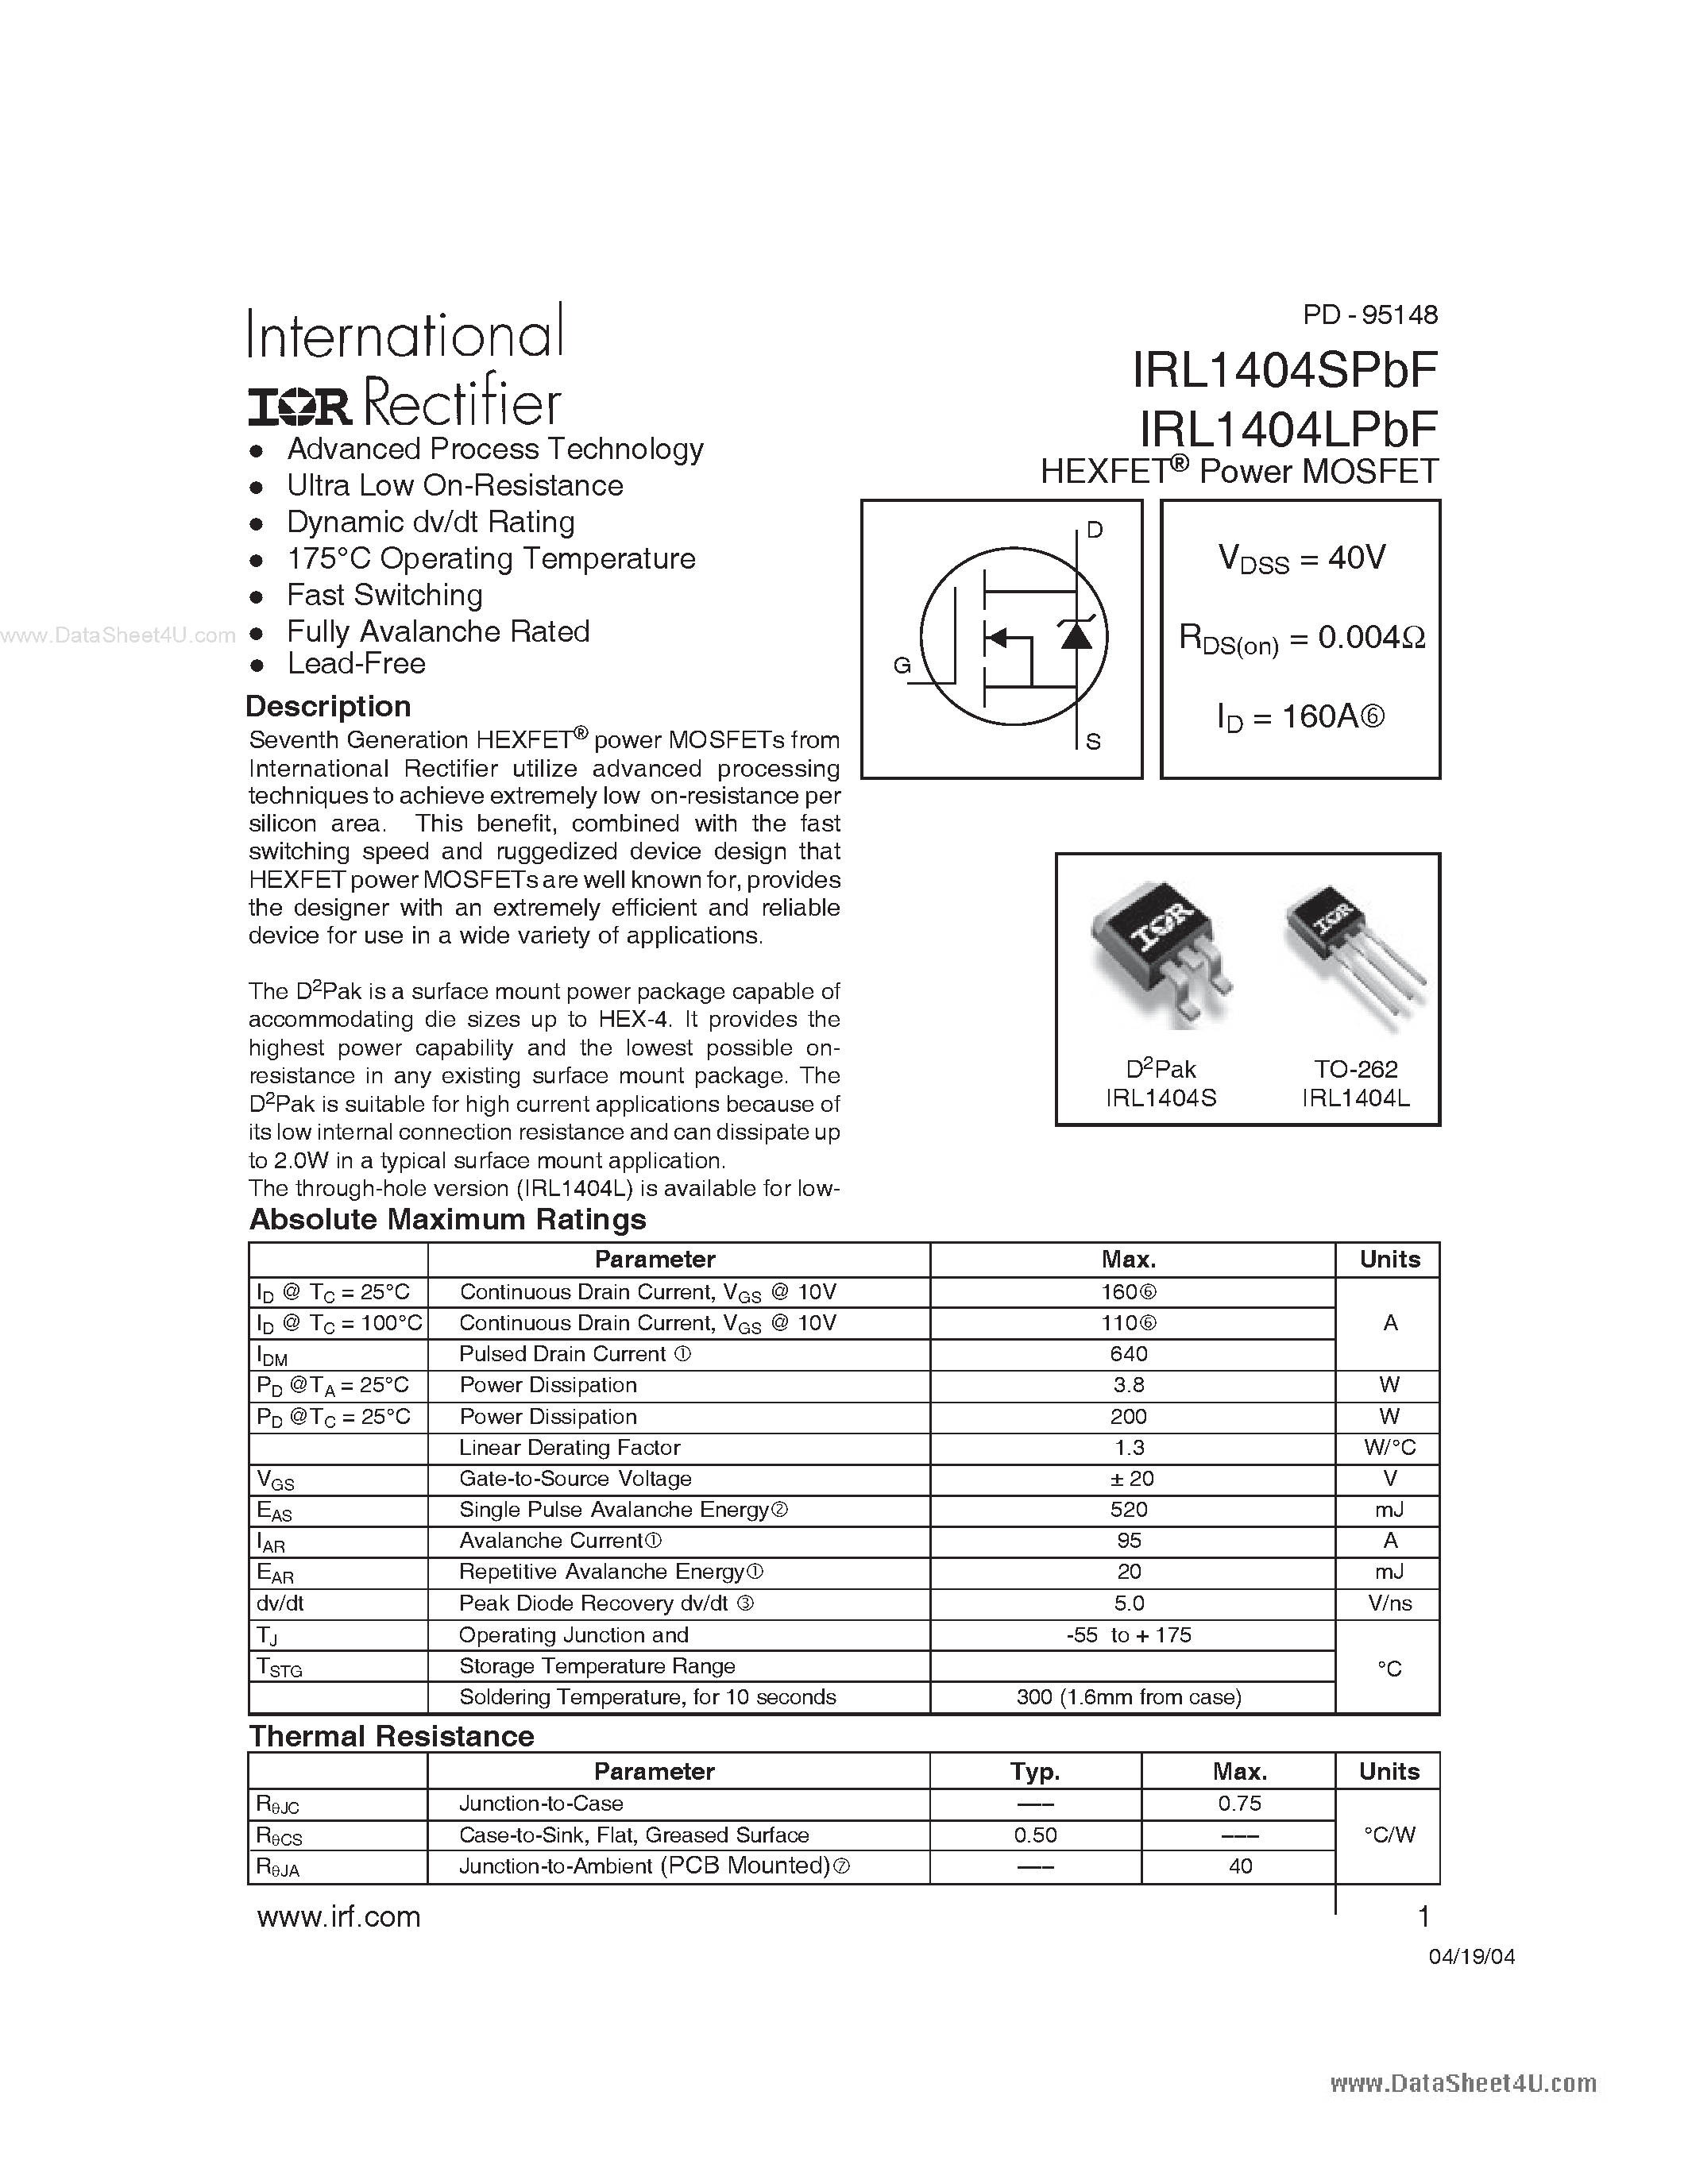 Даташит IRL1404LPBF-Power MOSFET страница 1